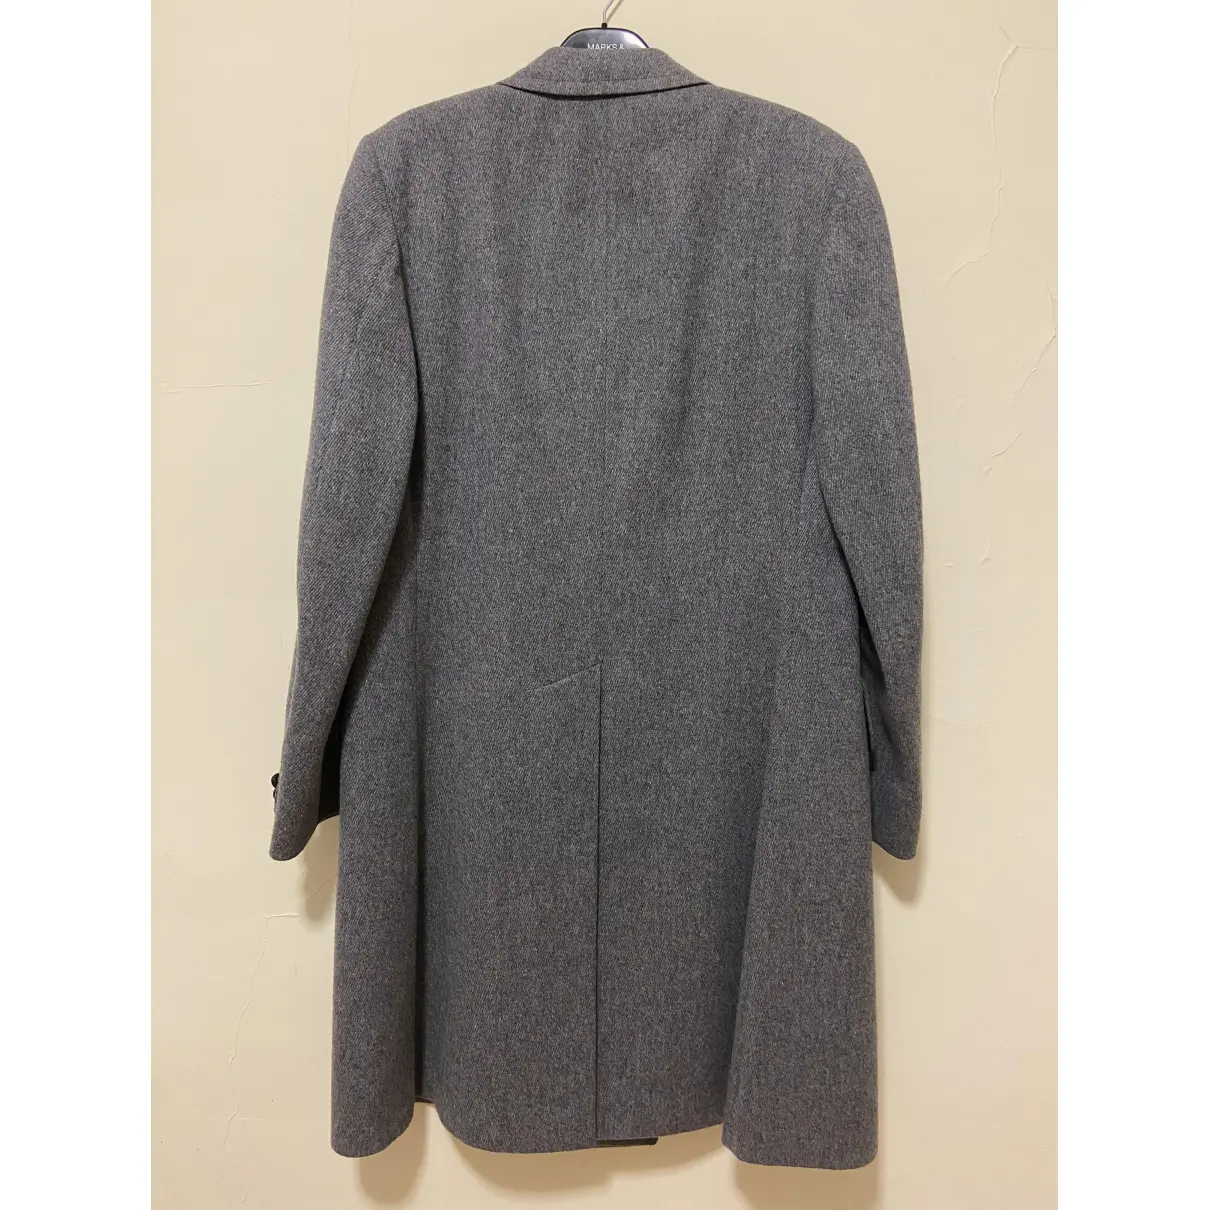 Buy Aquascutum Wool coat online